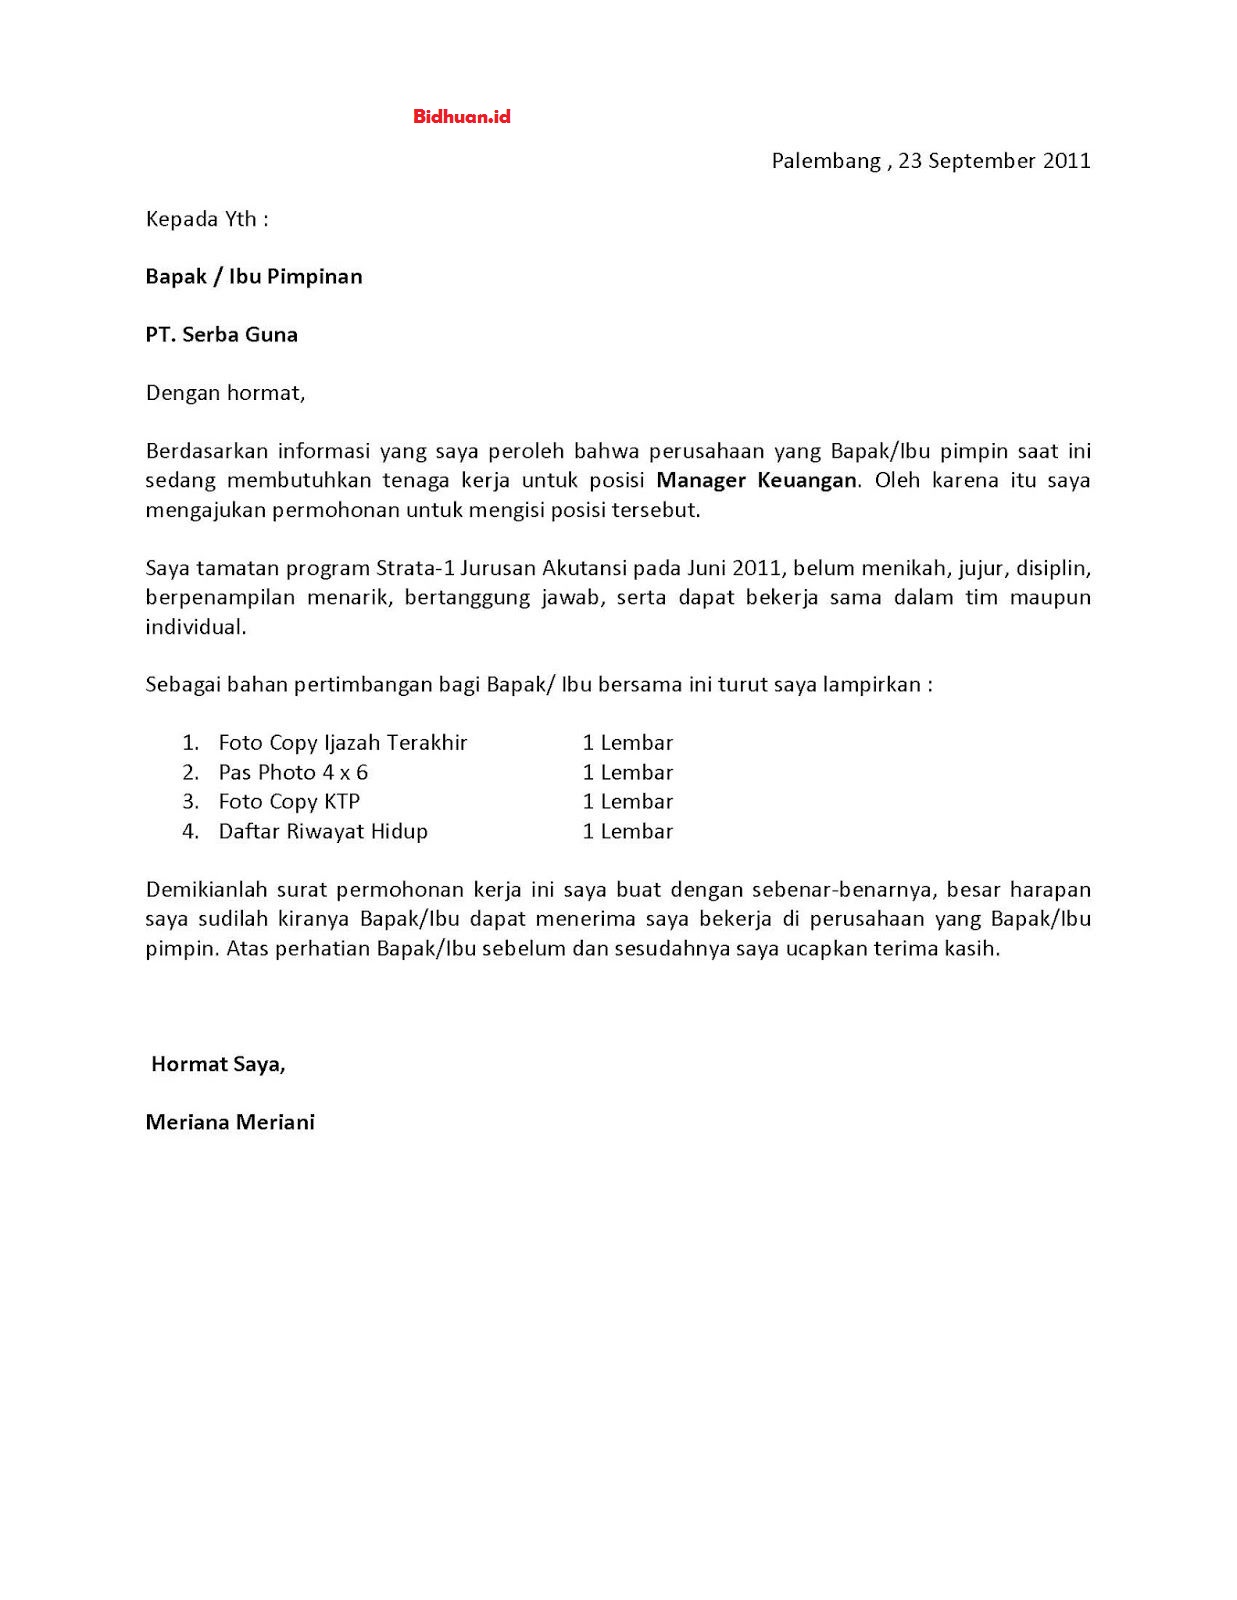 contoh cover letter bahasa Indonesia fresh graduate